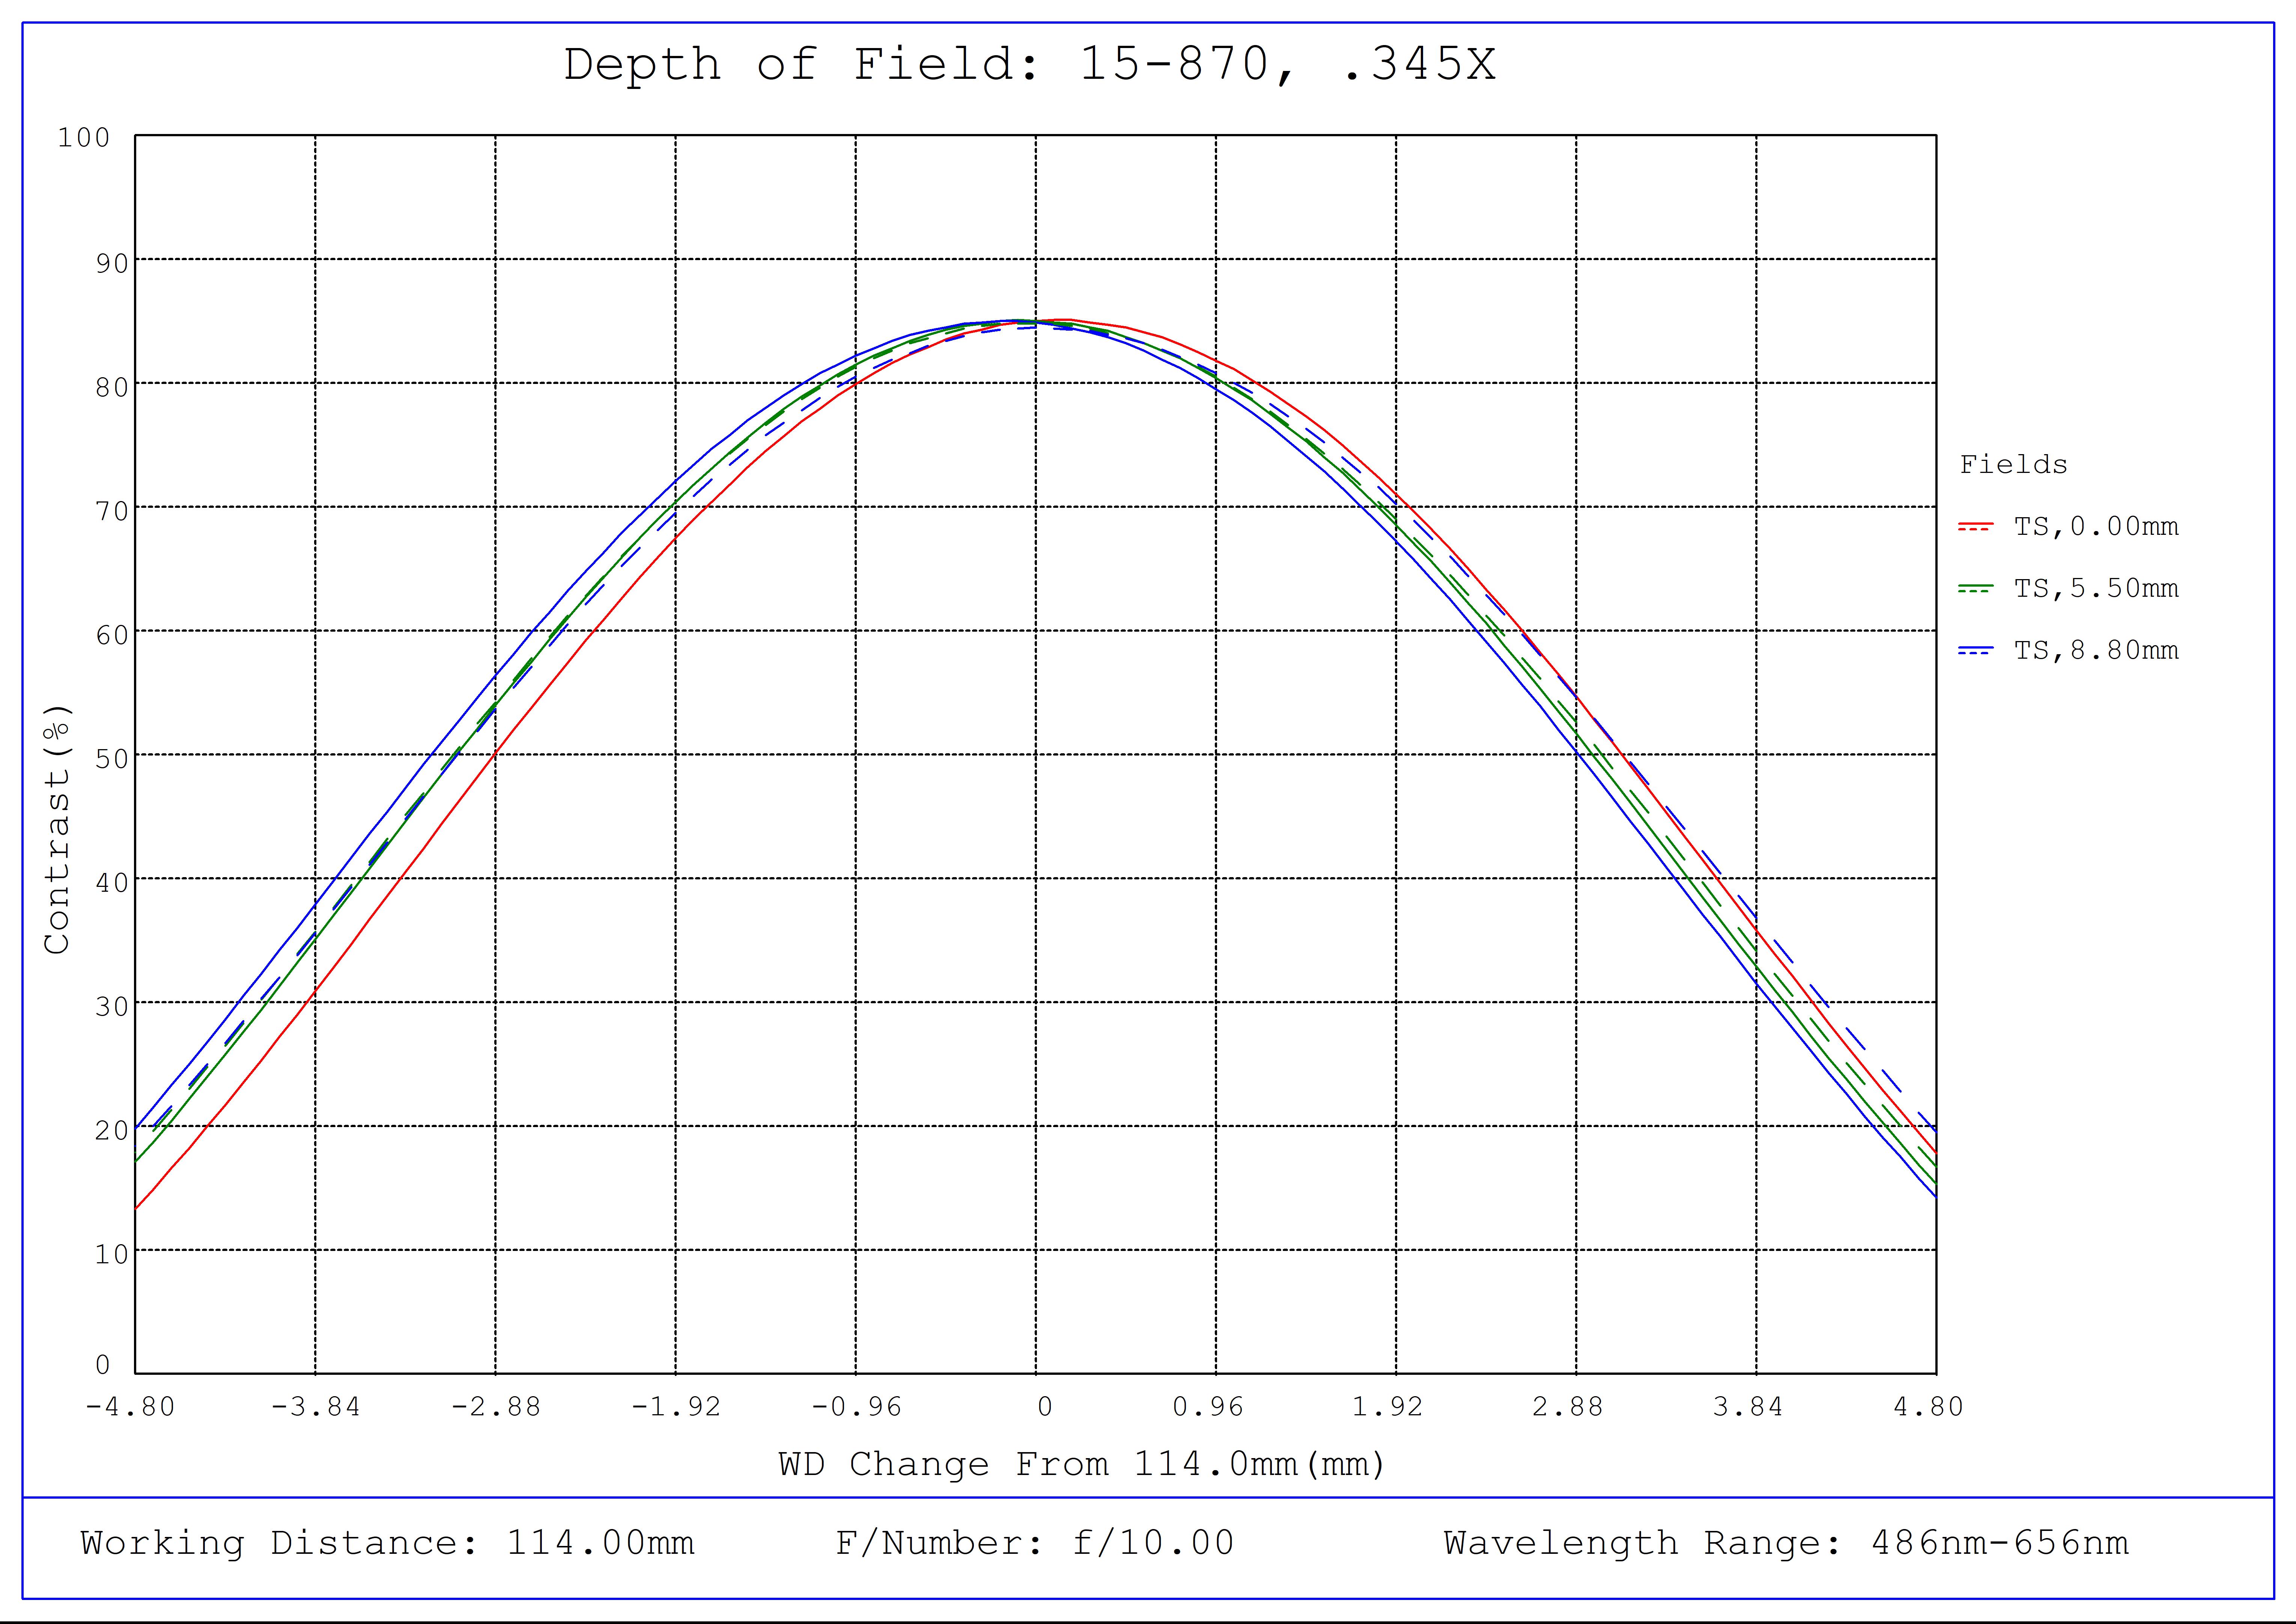 #15-870, 0.345X CobaltTL Telecentric Lens, Depth of Field Plot, 114mm Working Distance, f10